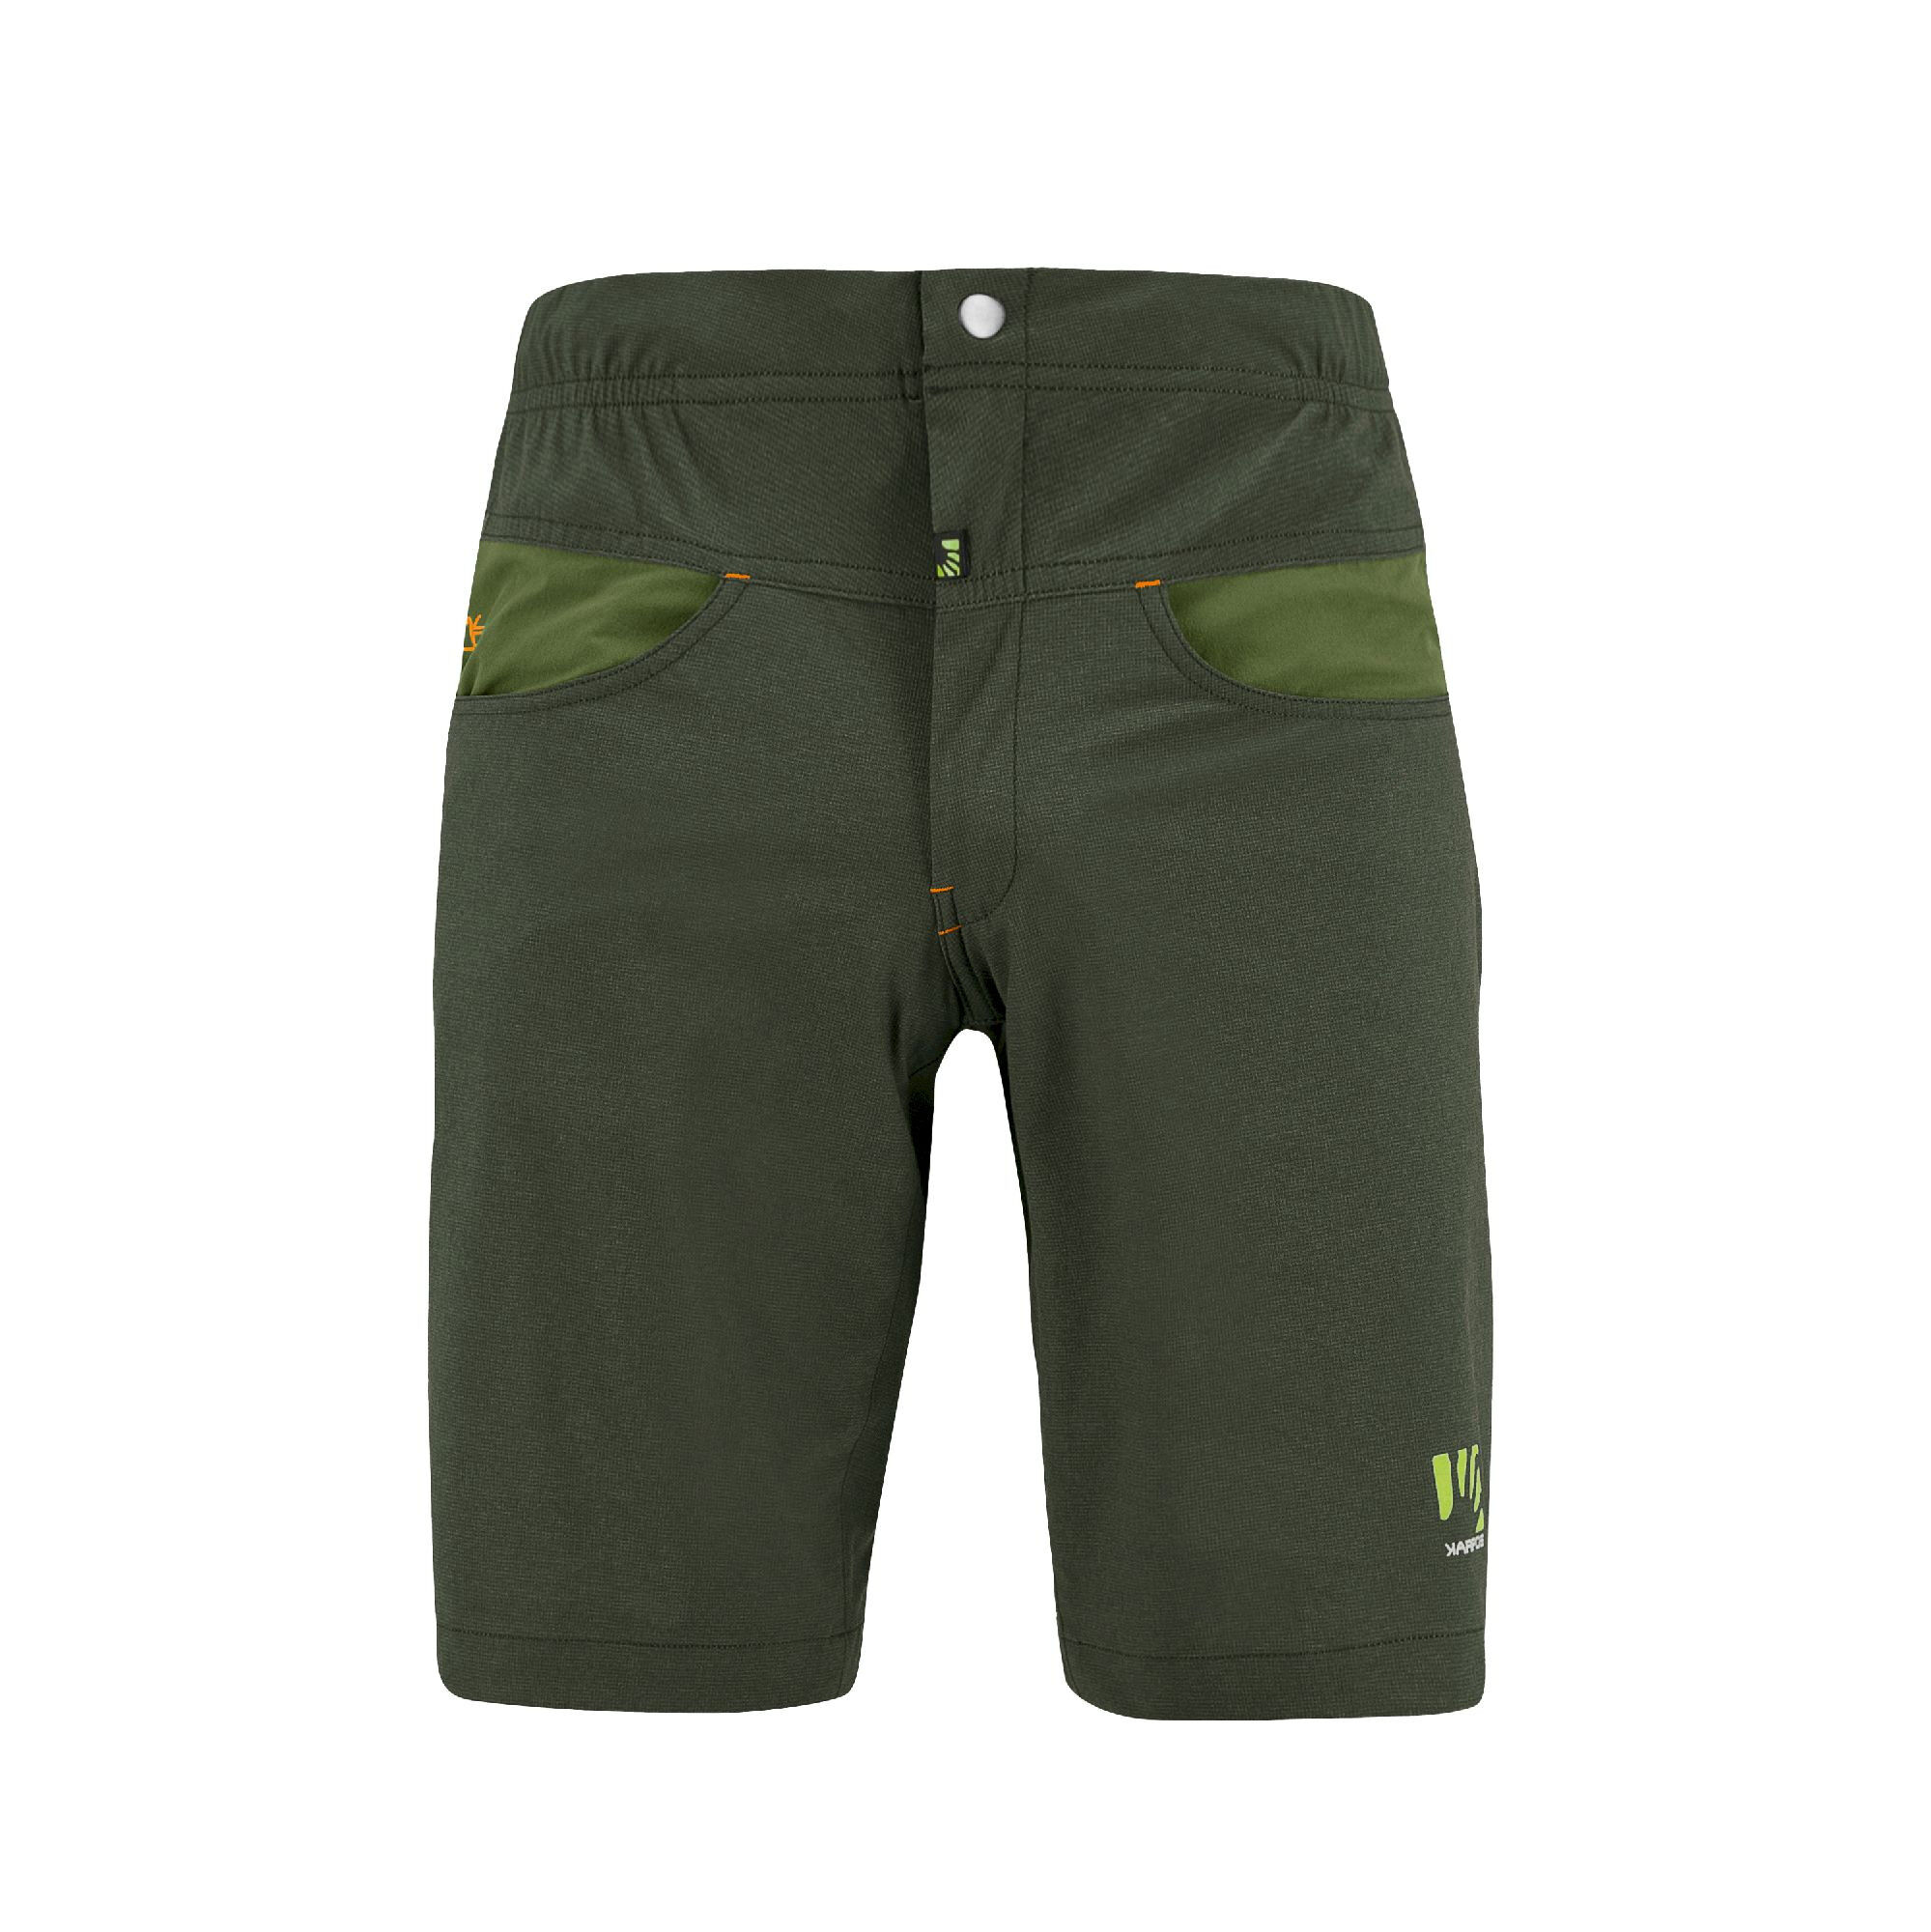 Karpos Dolada Bermuda - Climbing shorts - Men's